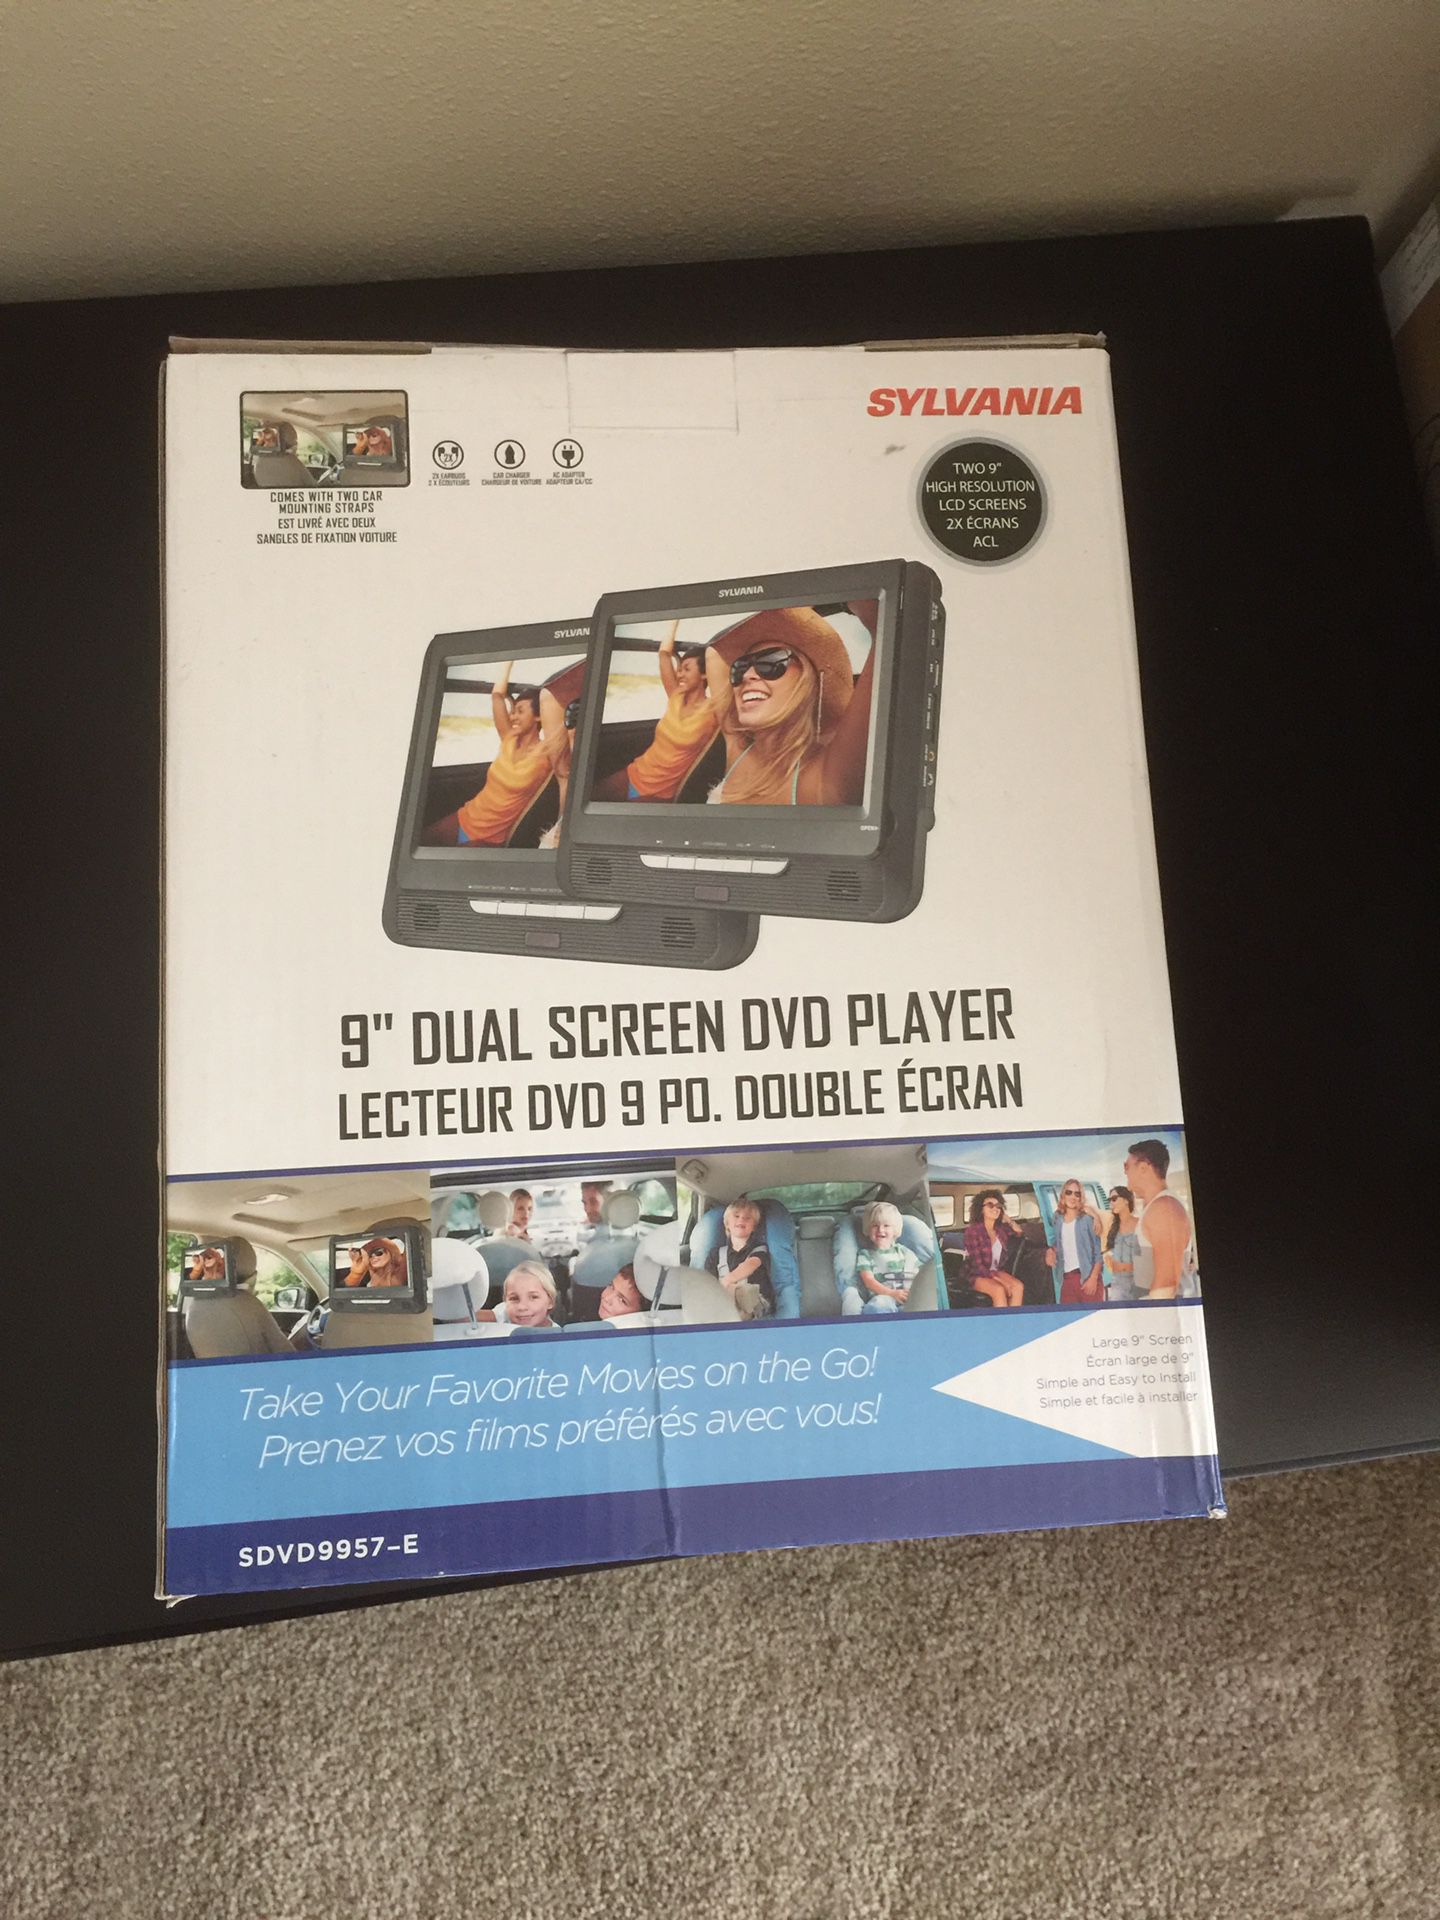 New in box 9” dual screen DVD player